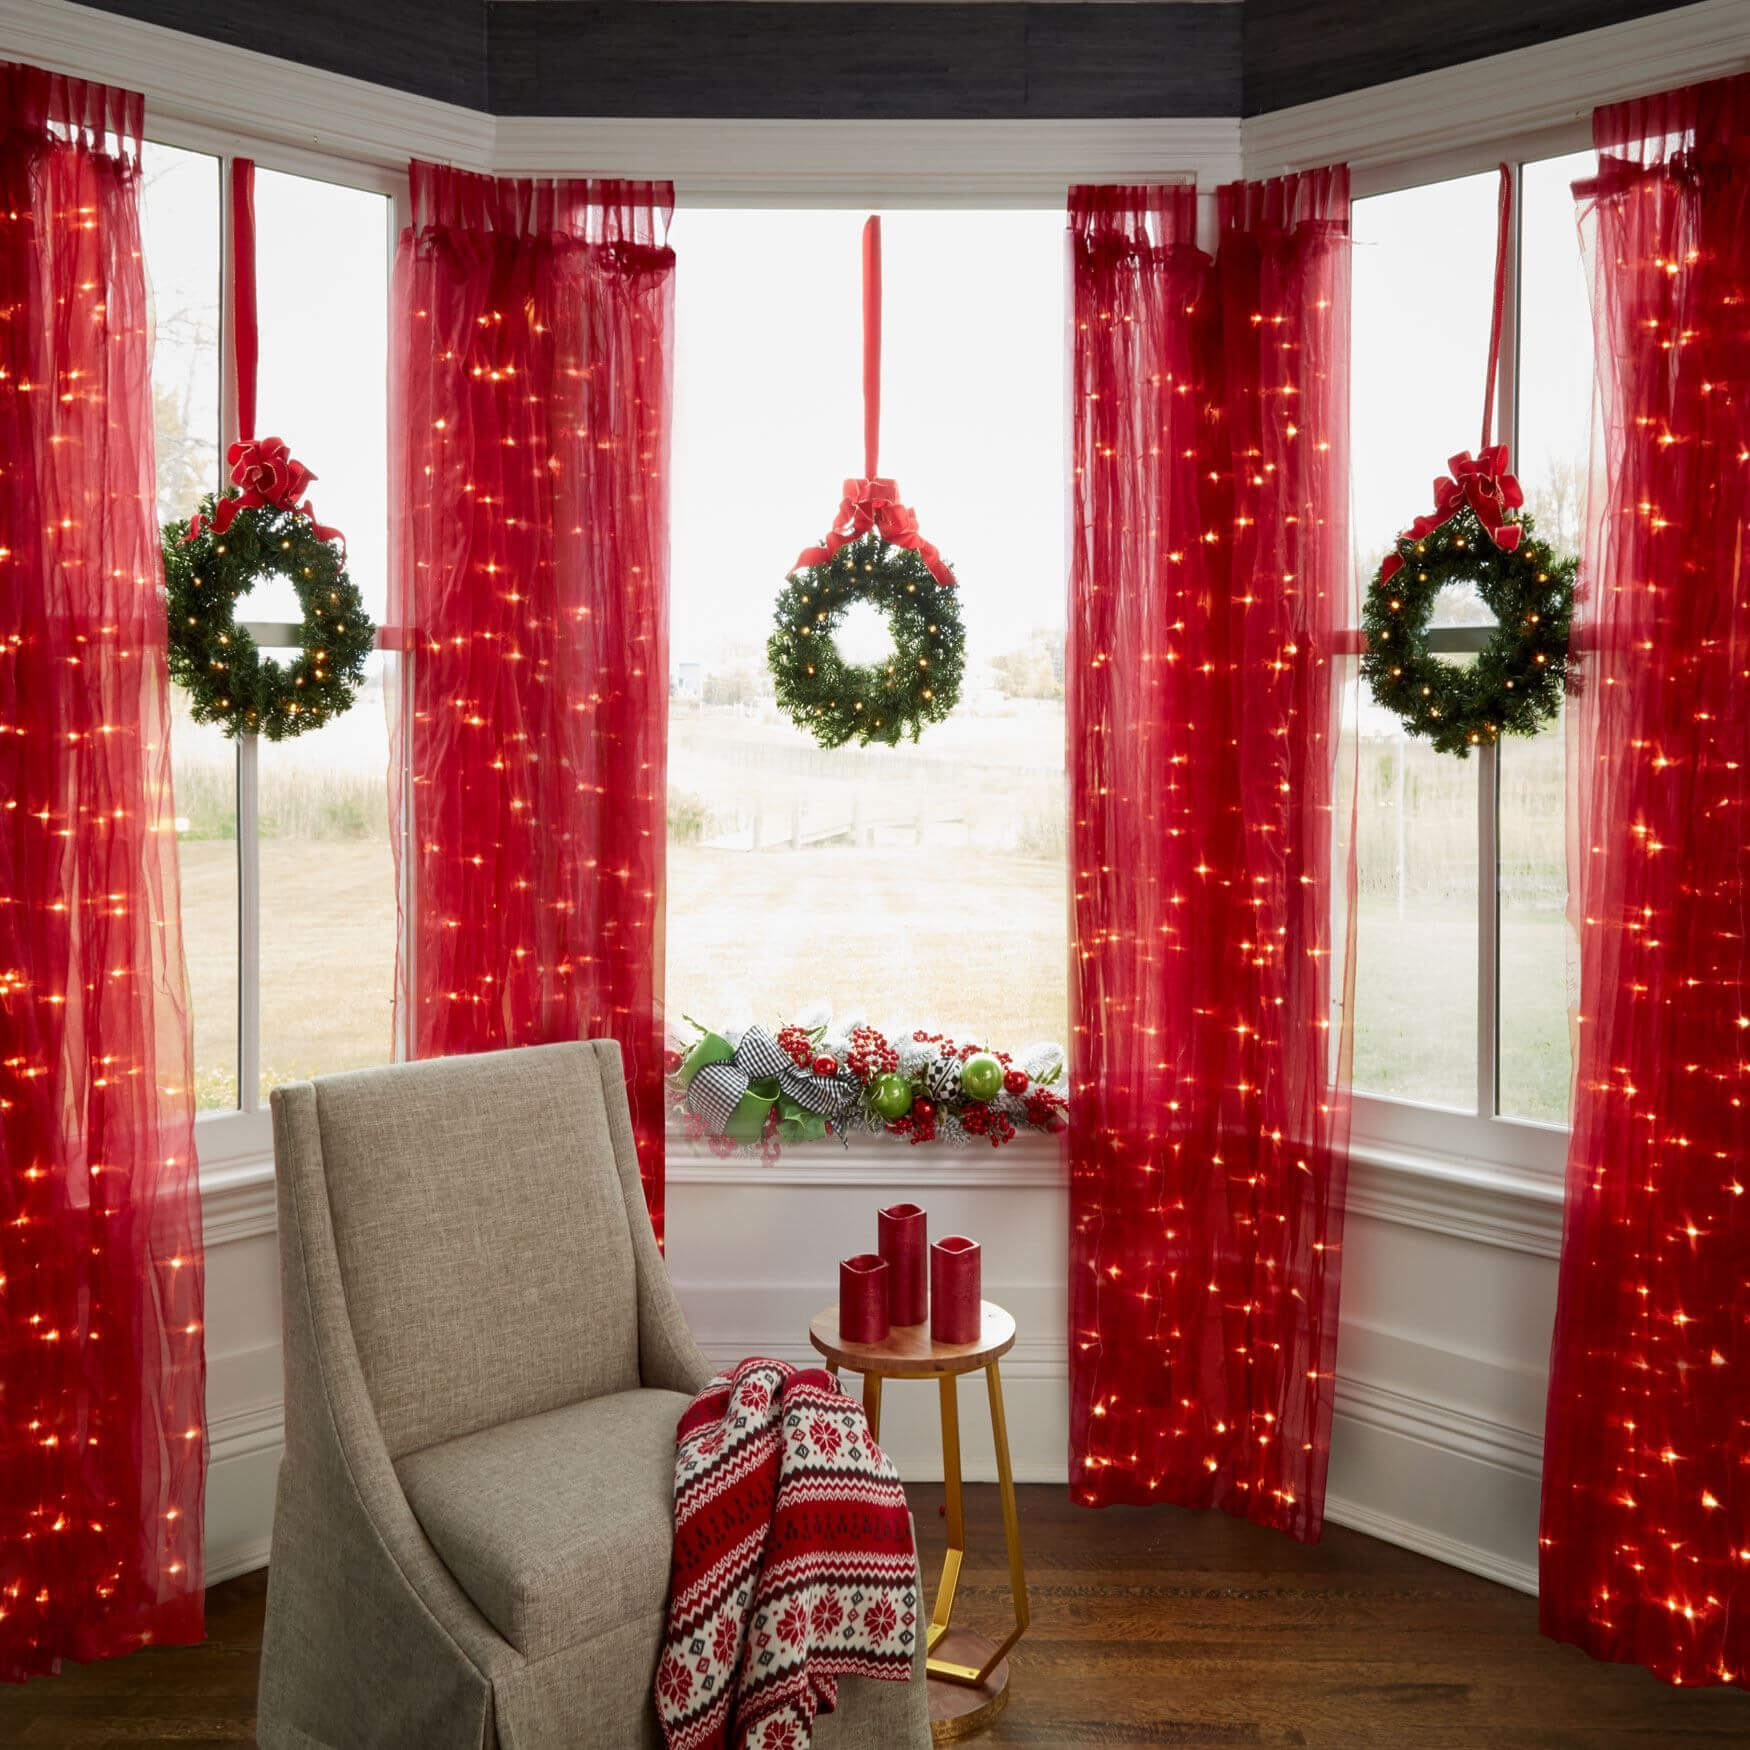 Windows Christmas wreath decoration